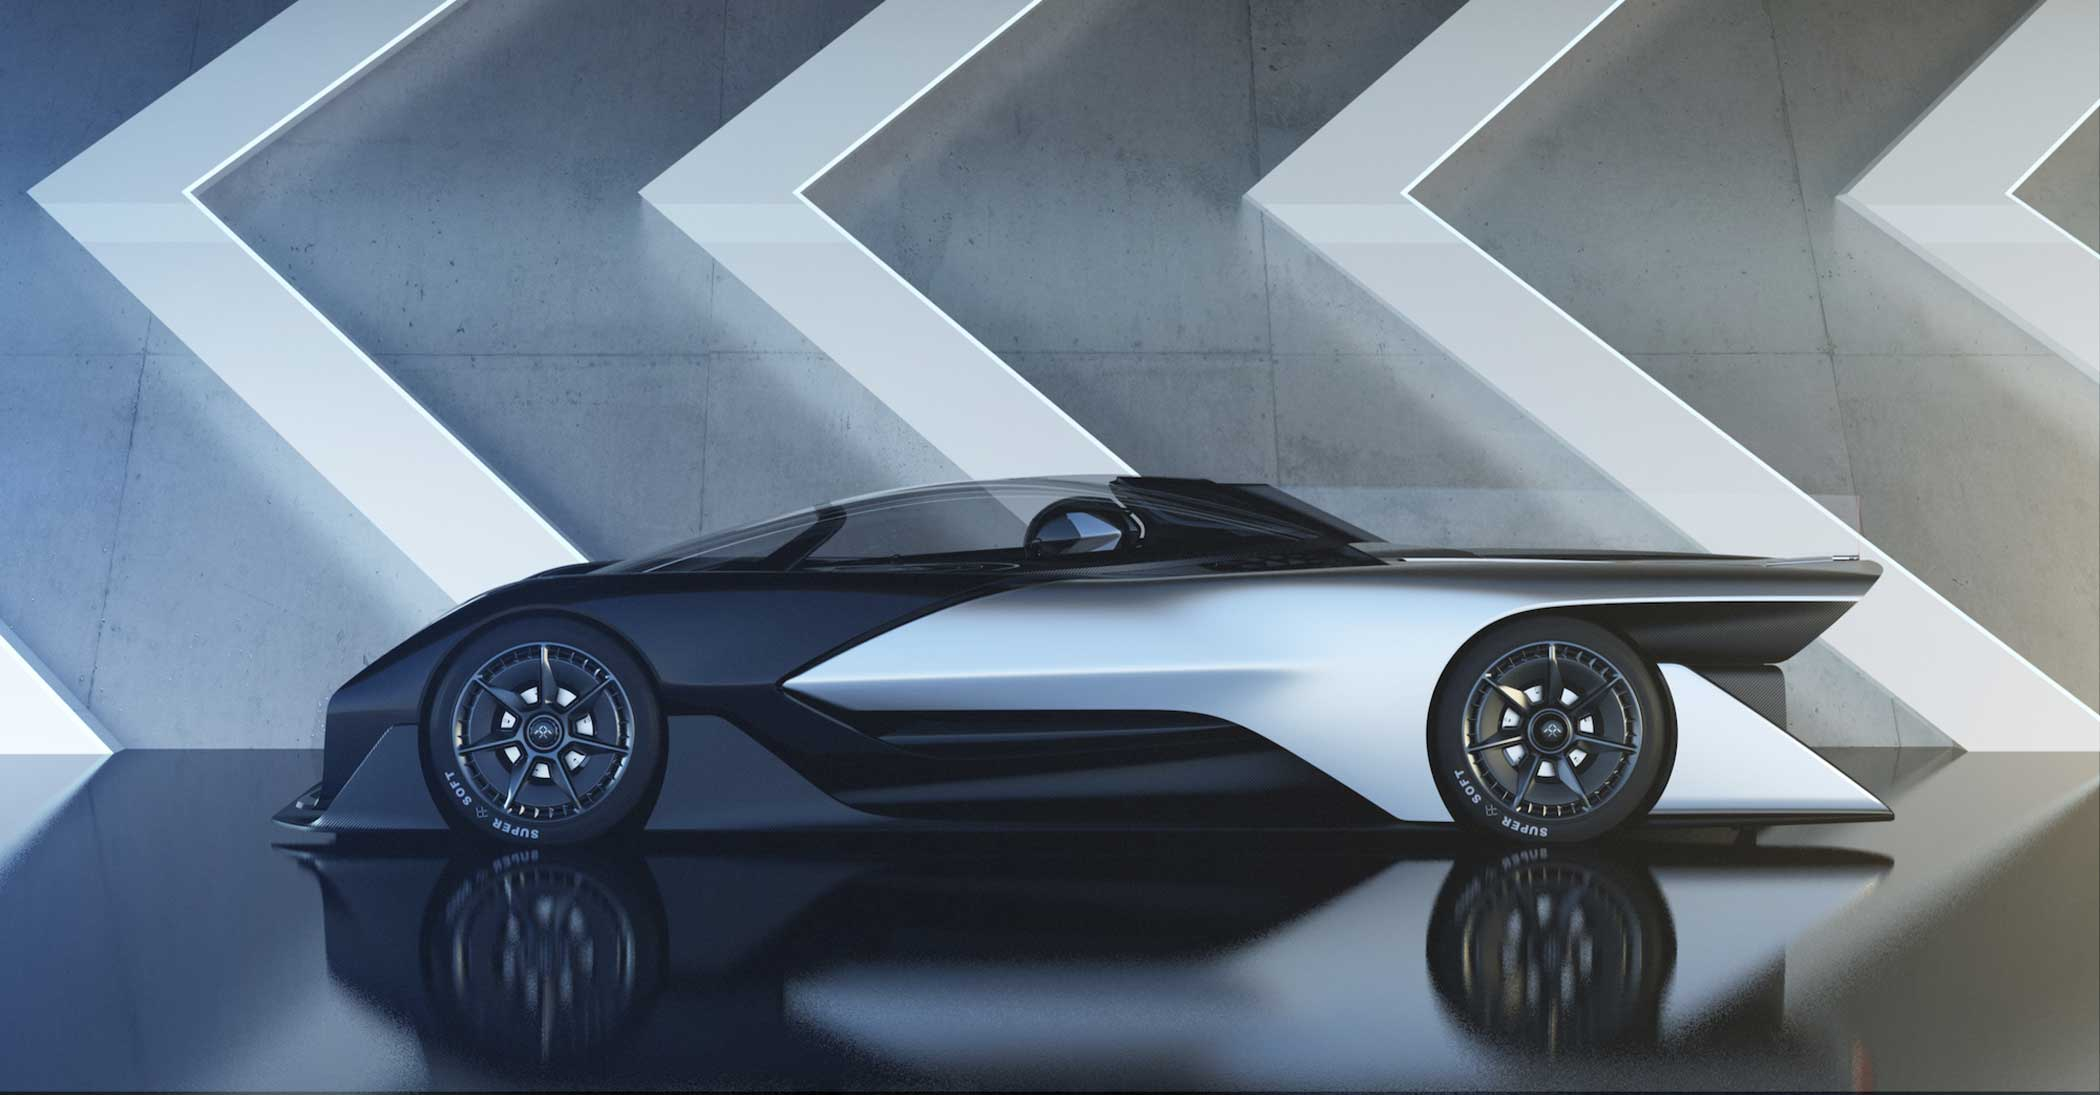 Faraday Future's FZERO1 Concept car